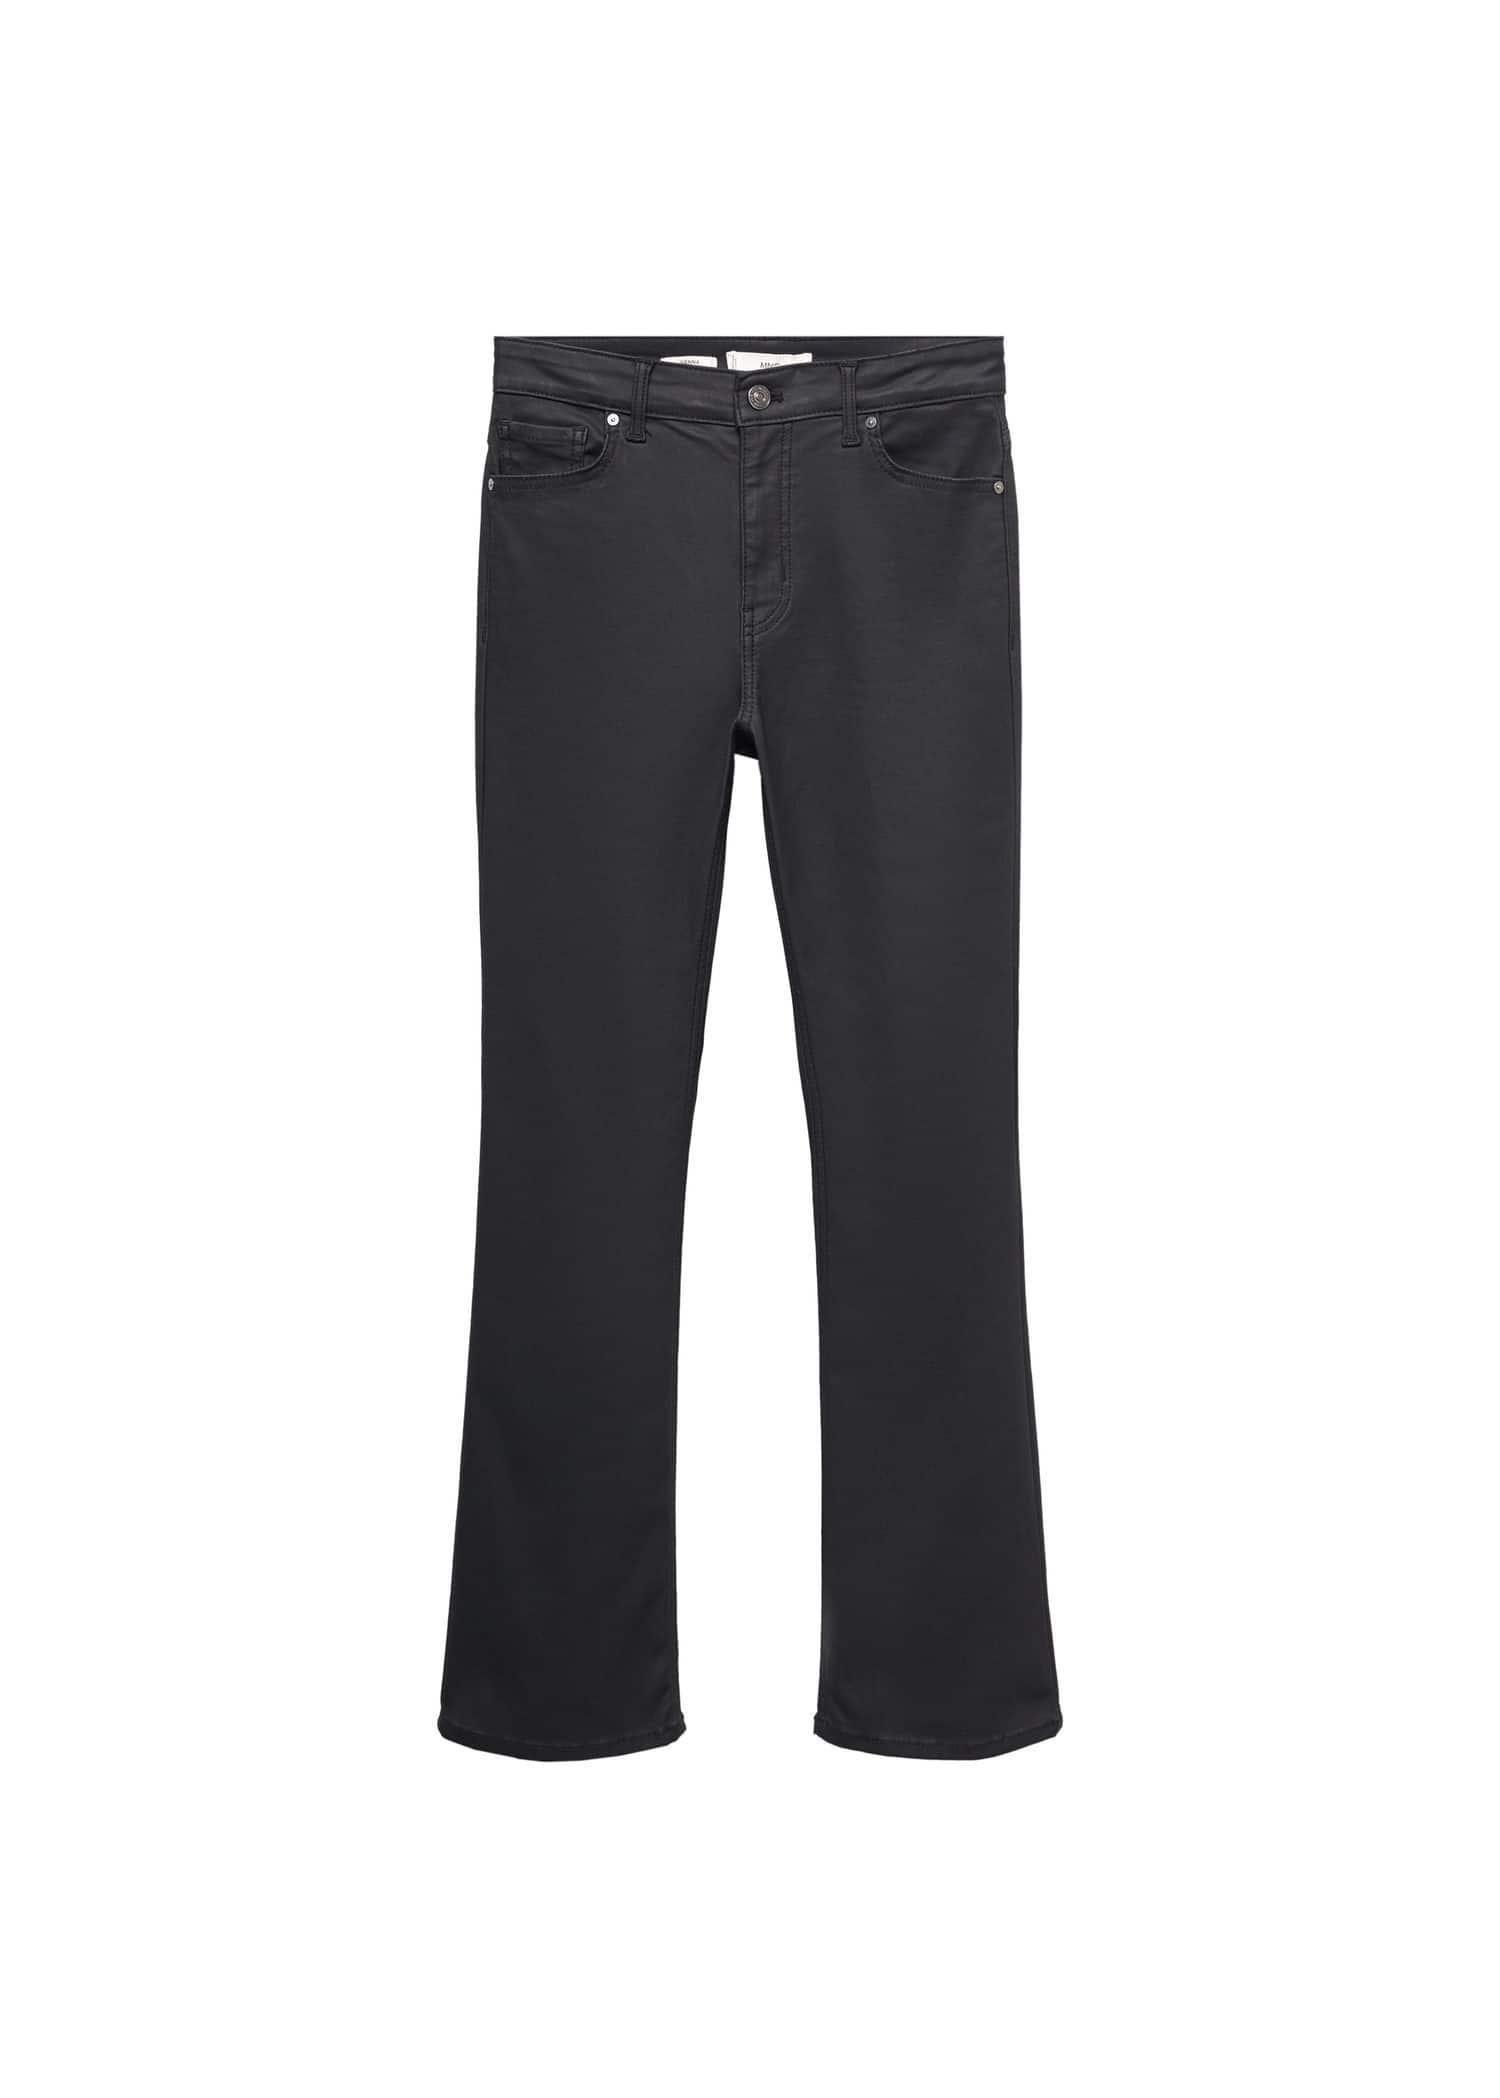 Mango - Black Waxed Flare Crop Jeans